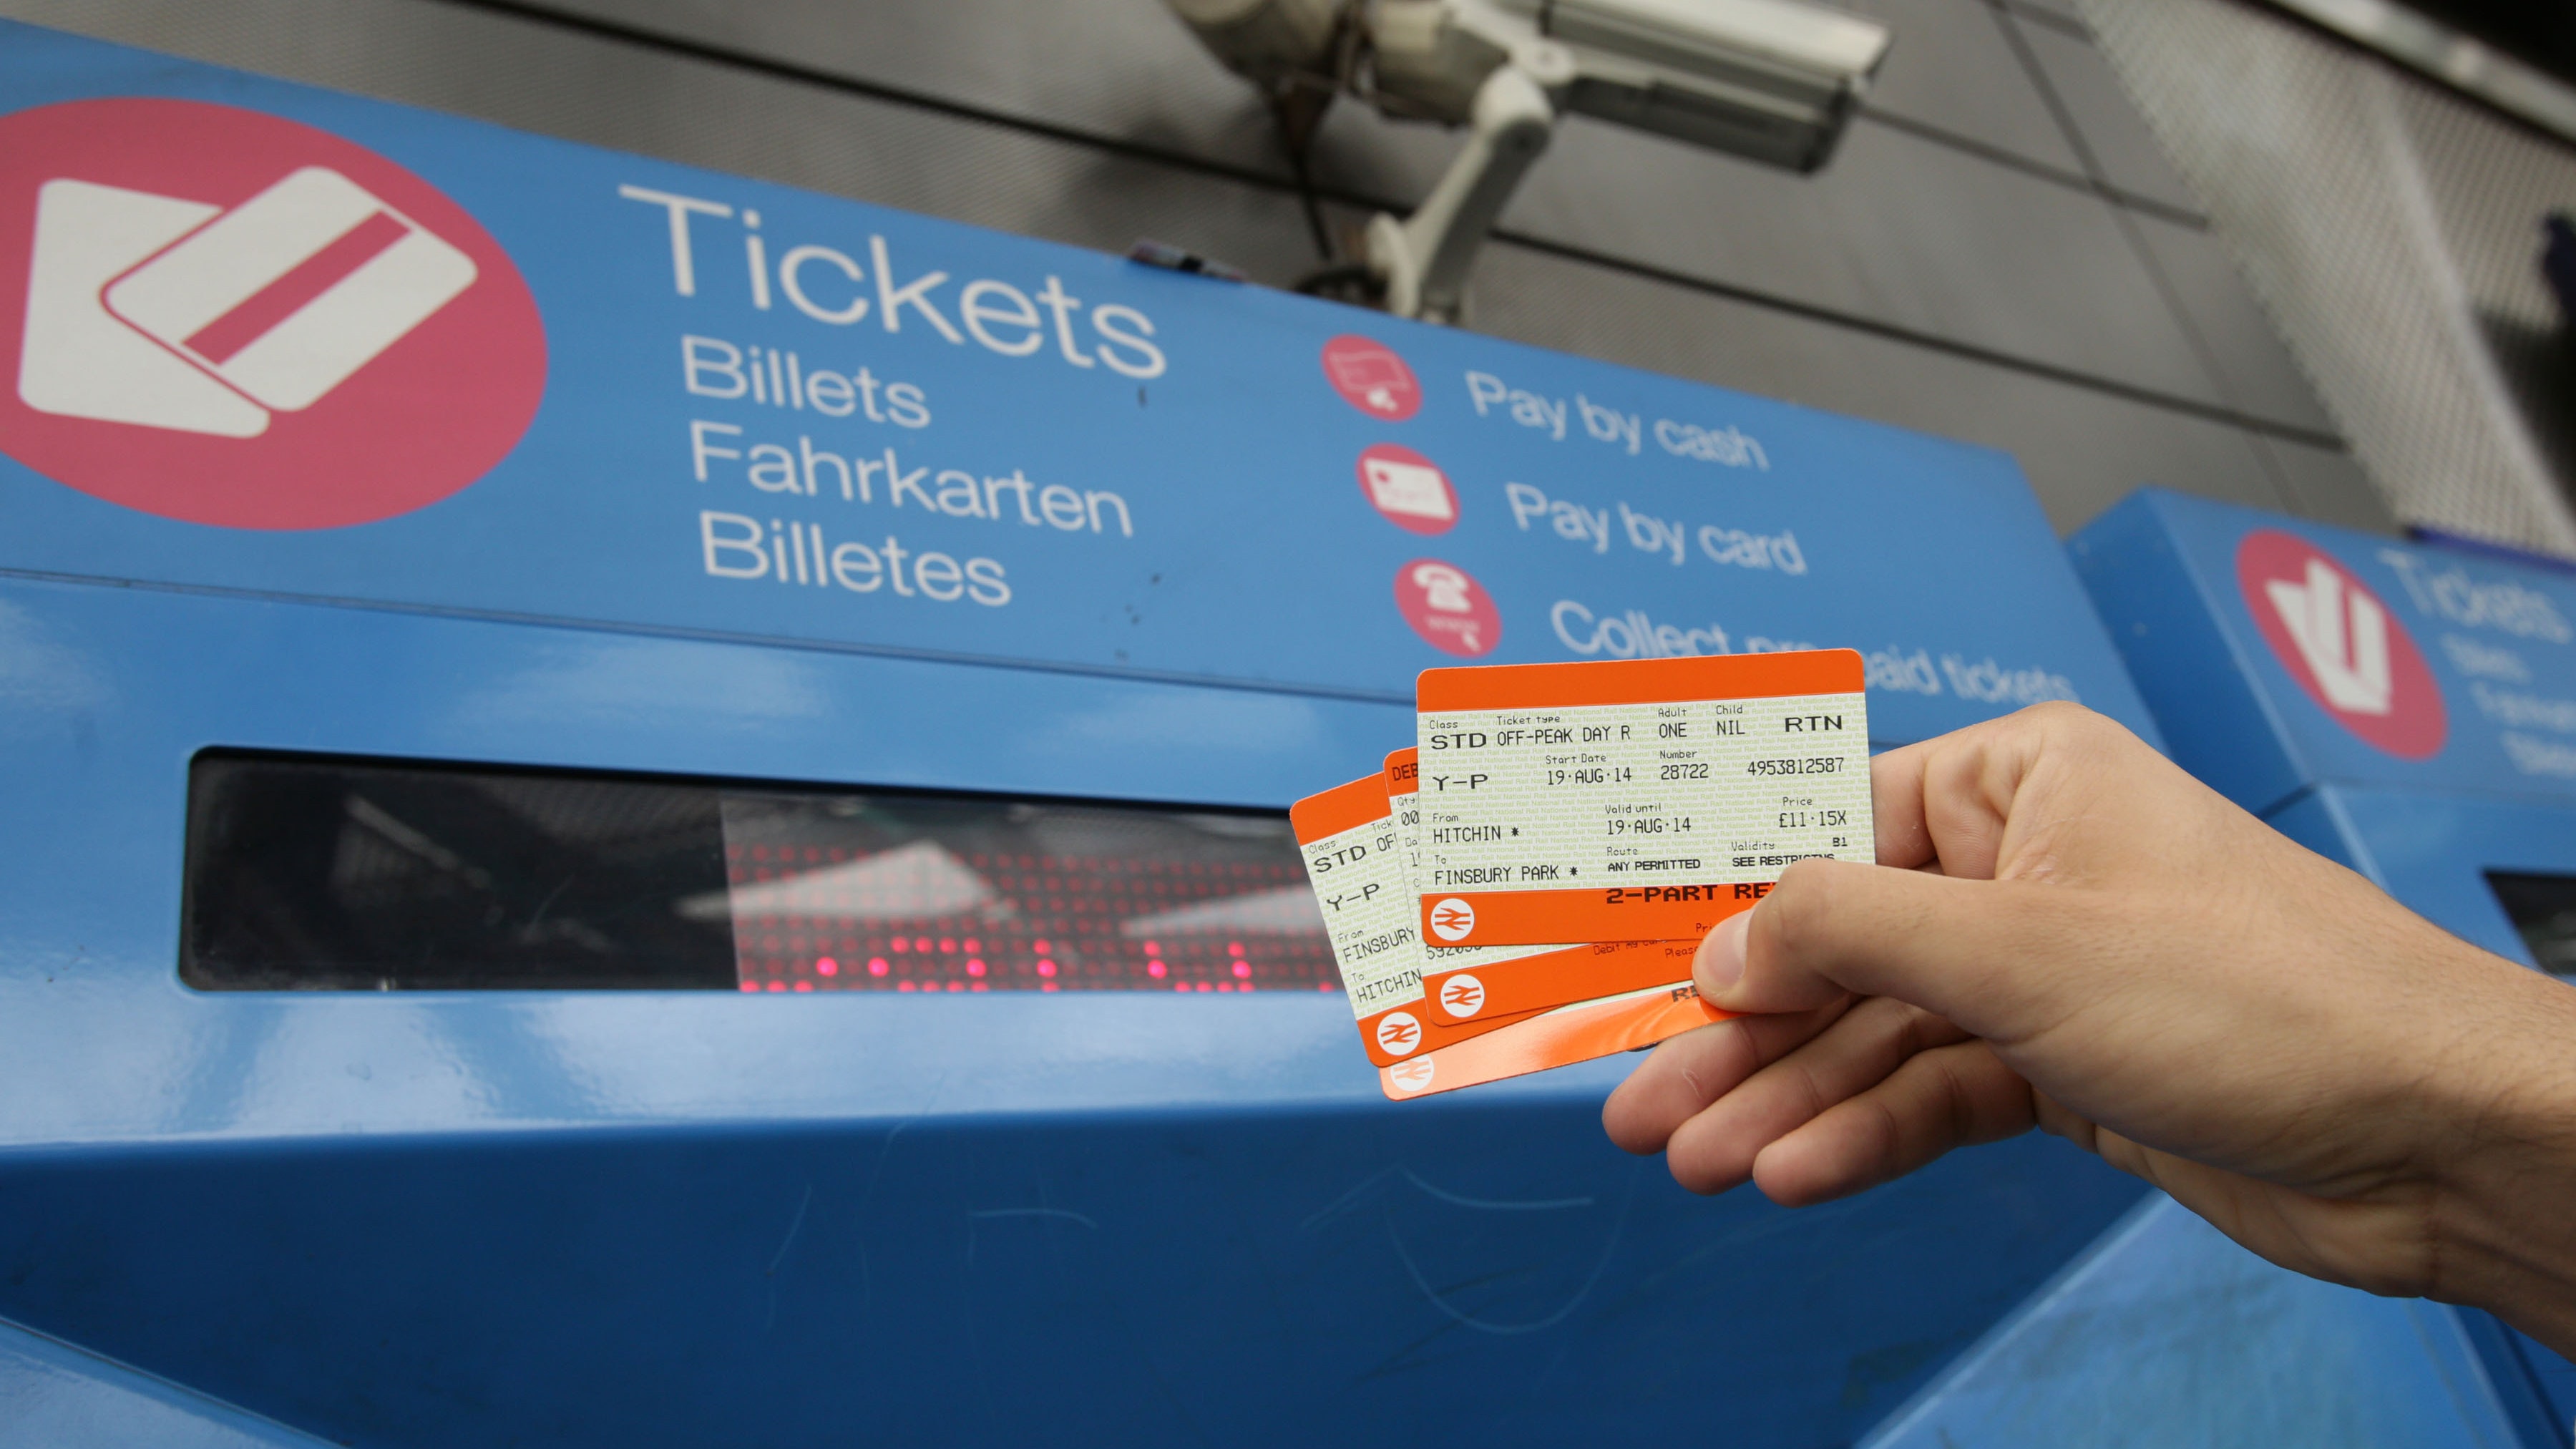 Performance ticket. Билет ticket. Buy a ticket. Train ticket. Buy a Train ticket.